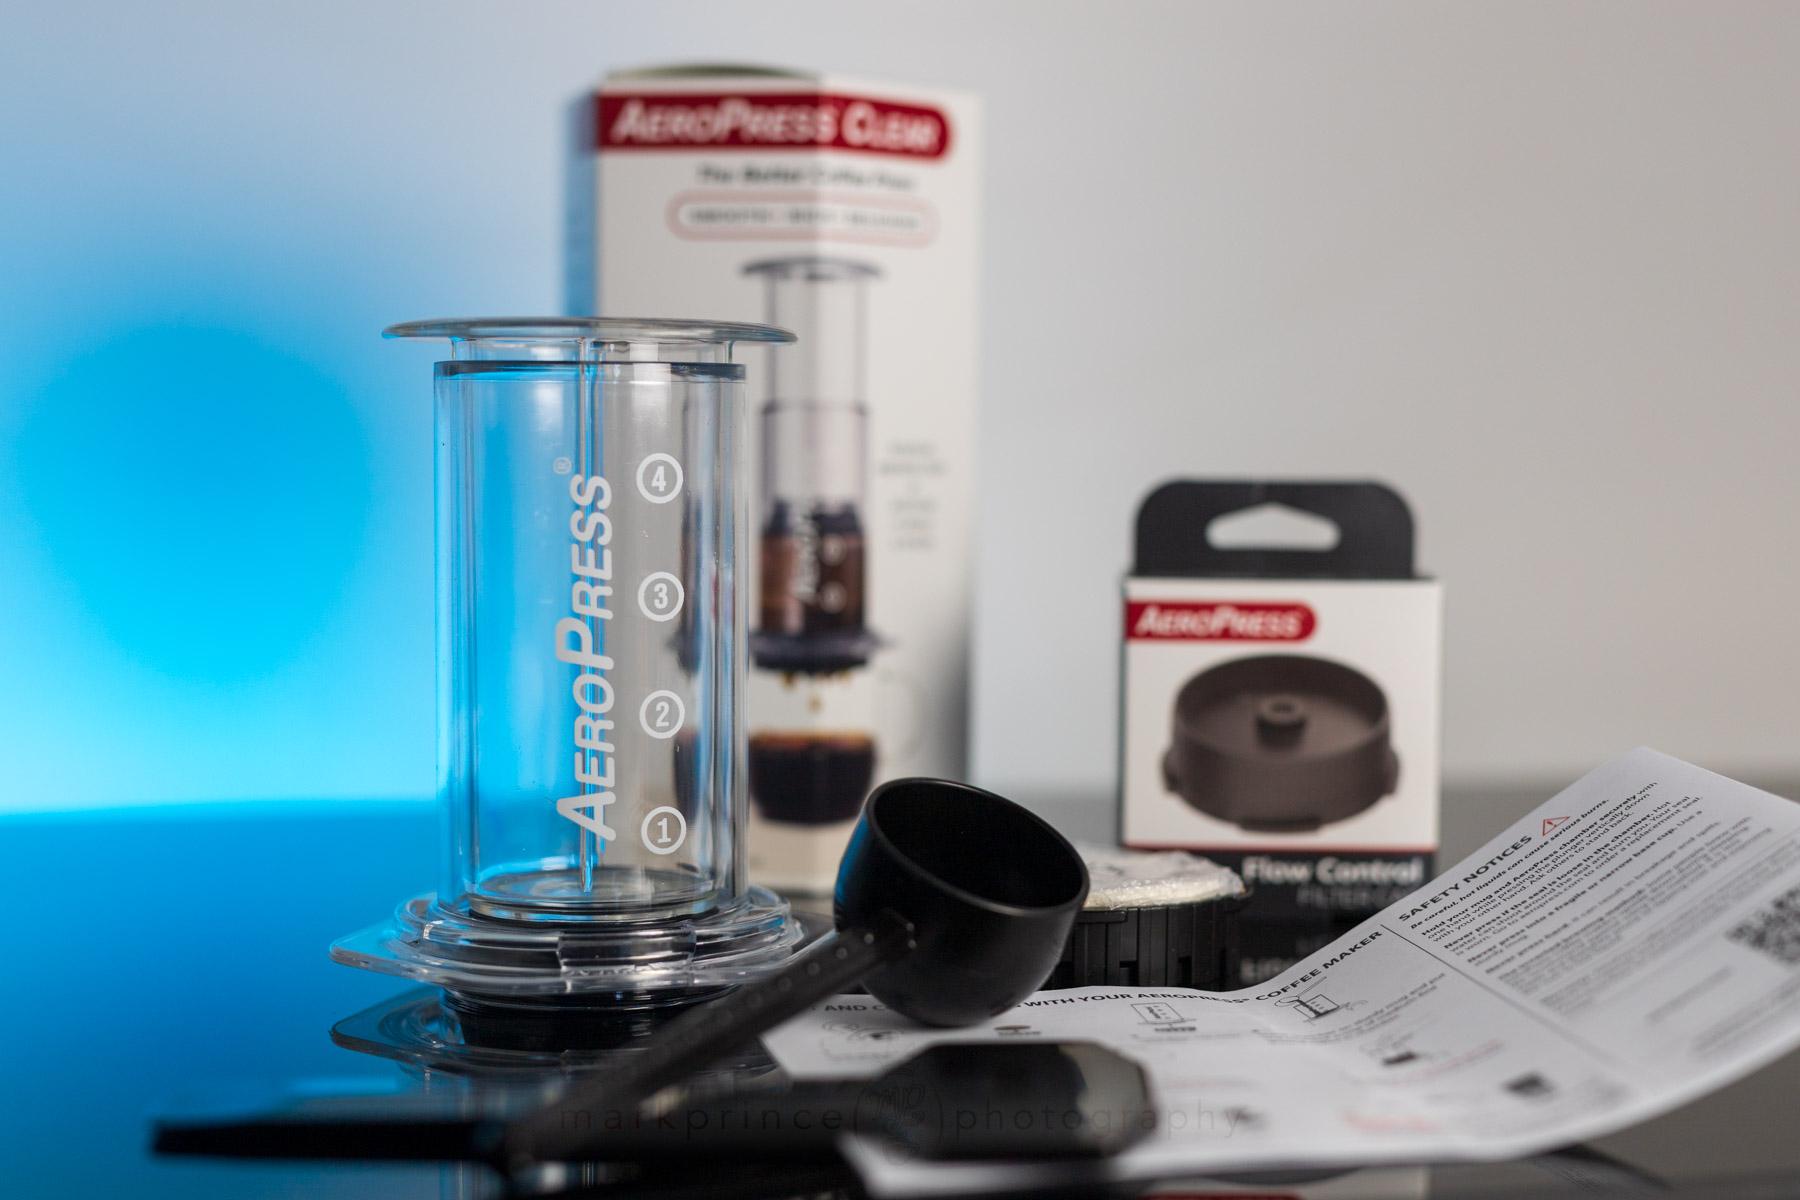 AeroPress Clear Three in One Coffee Maker - World Market